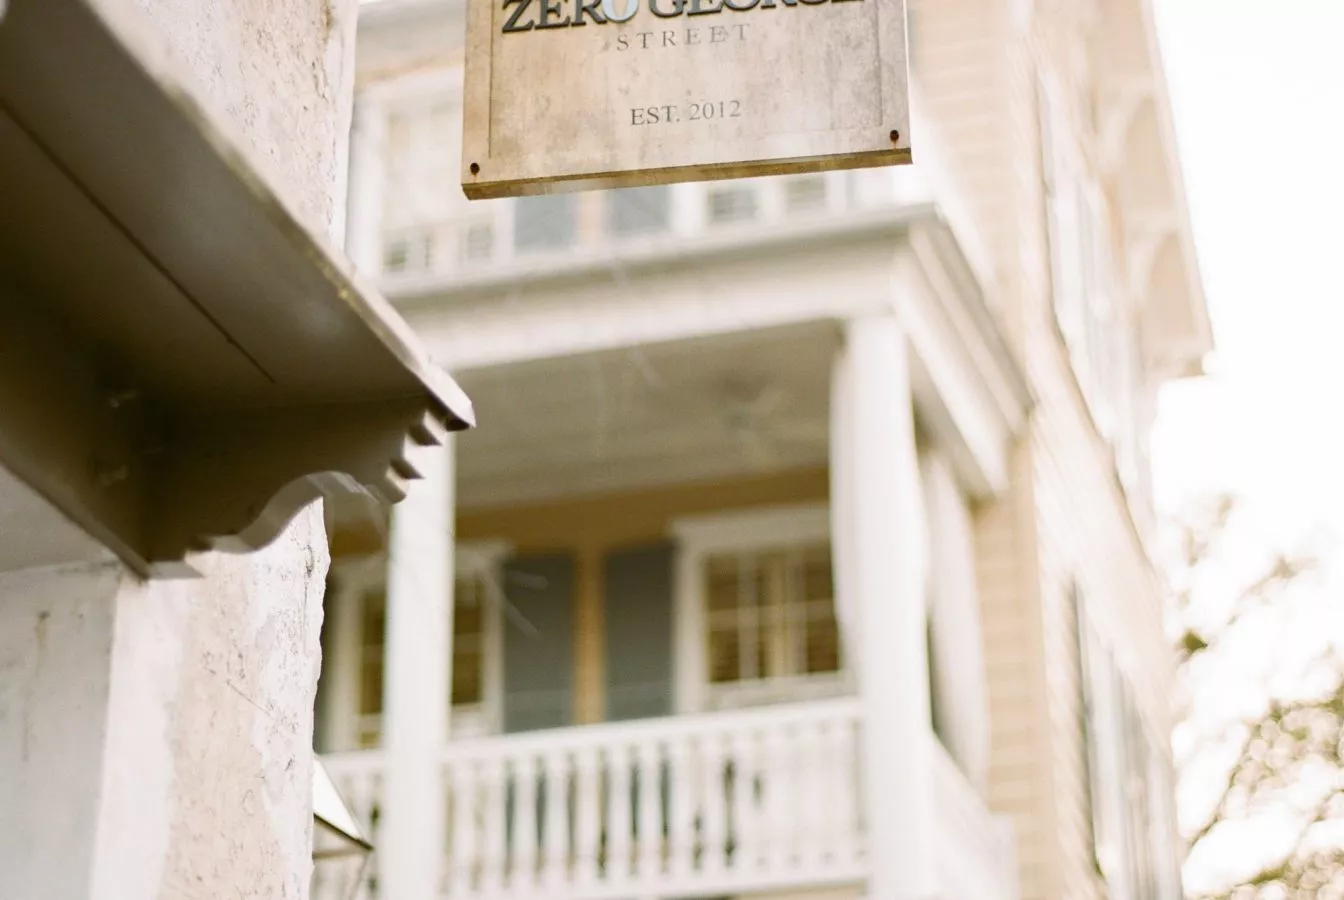 Zero George exterior sign